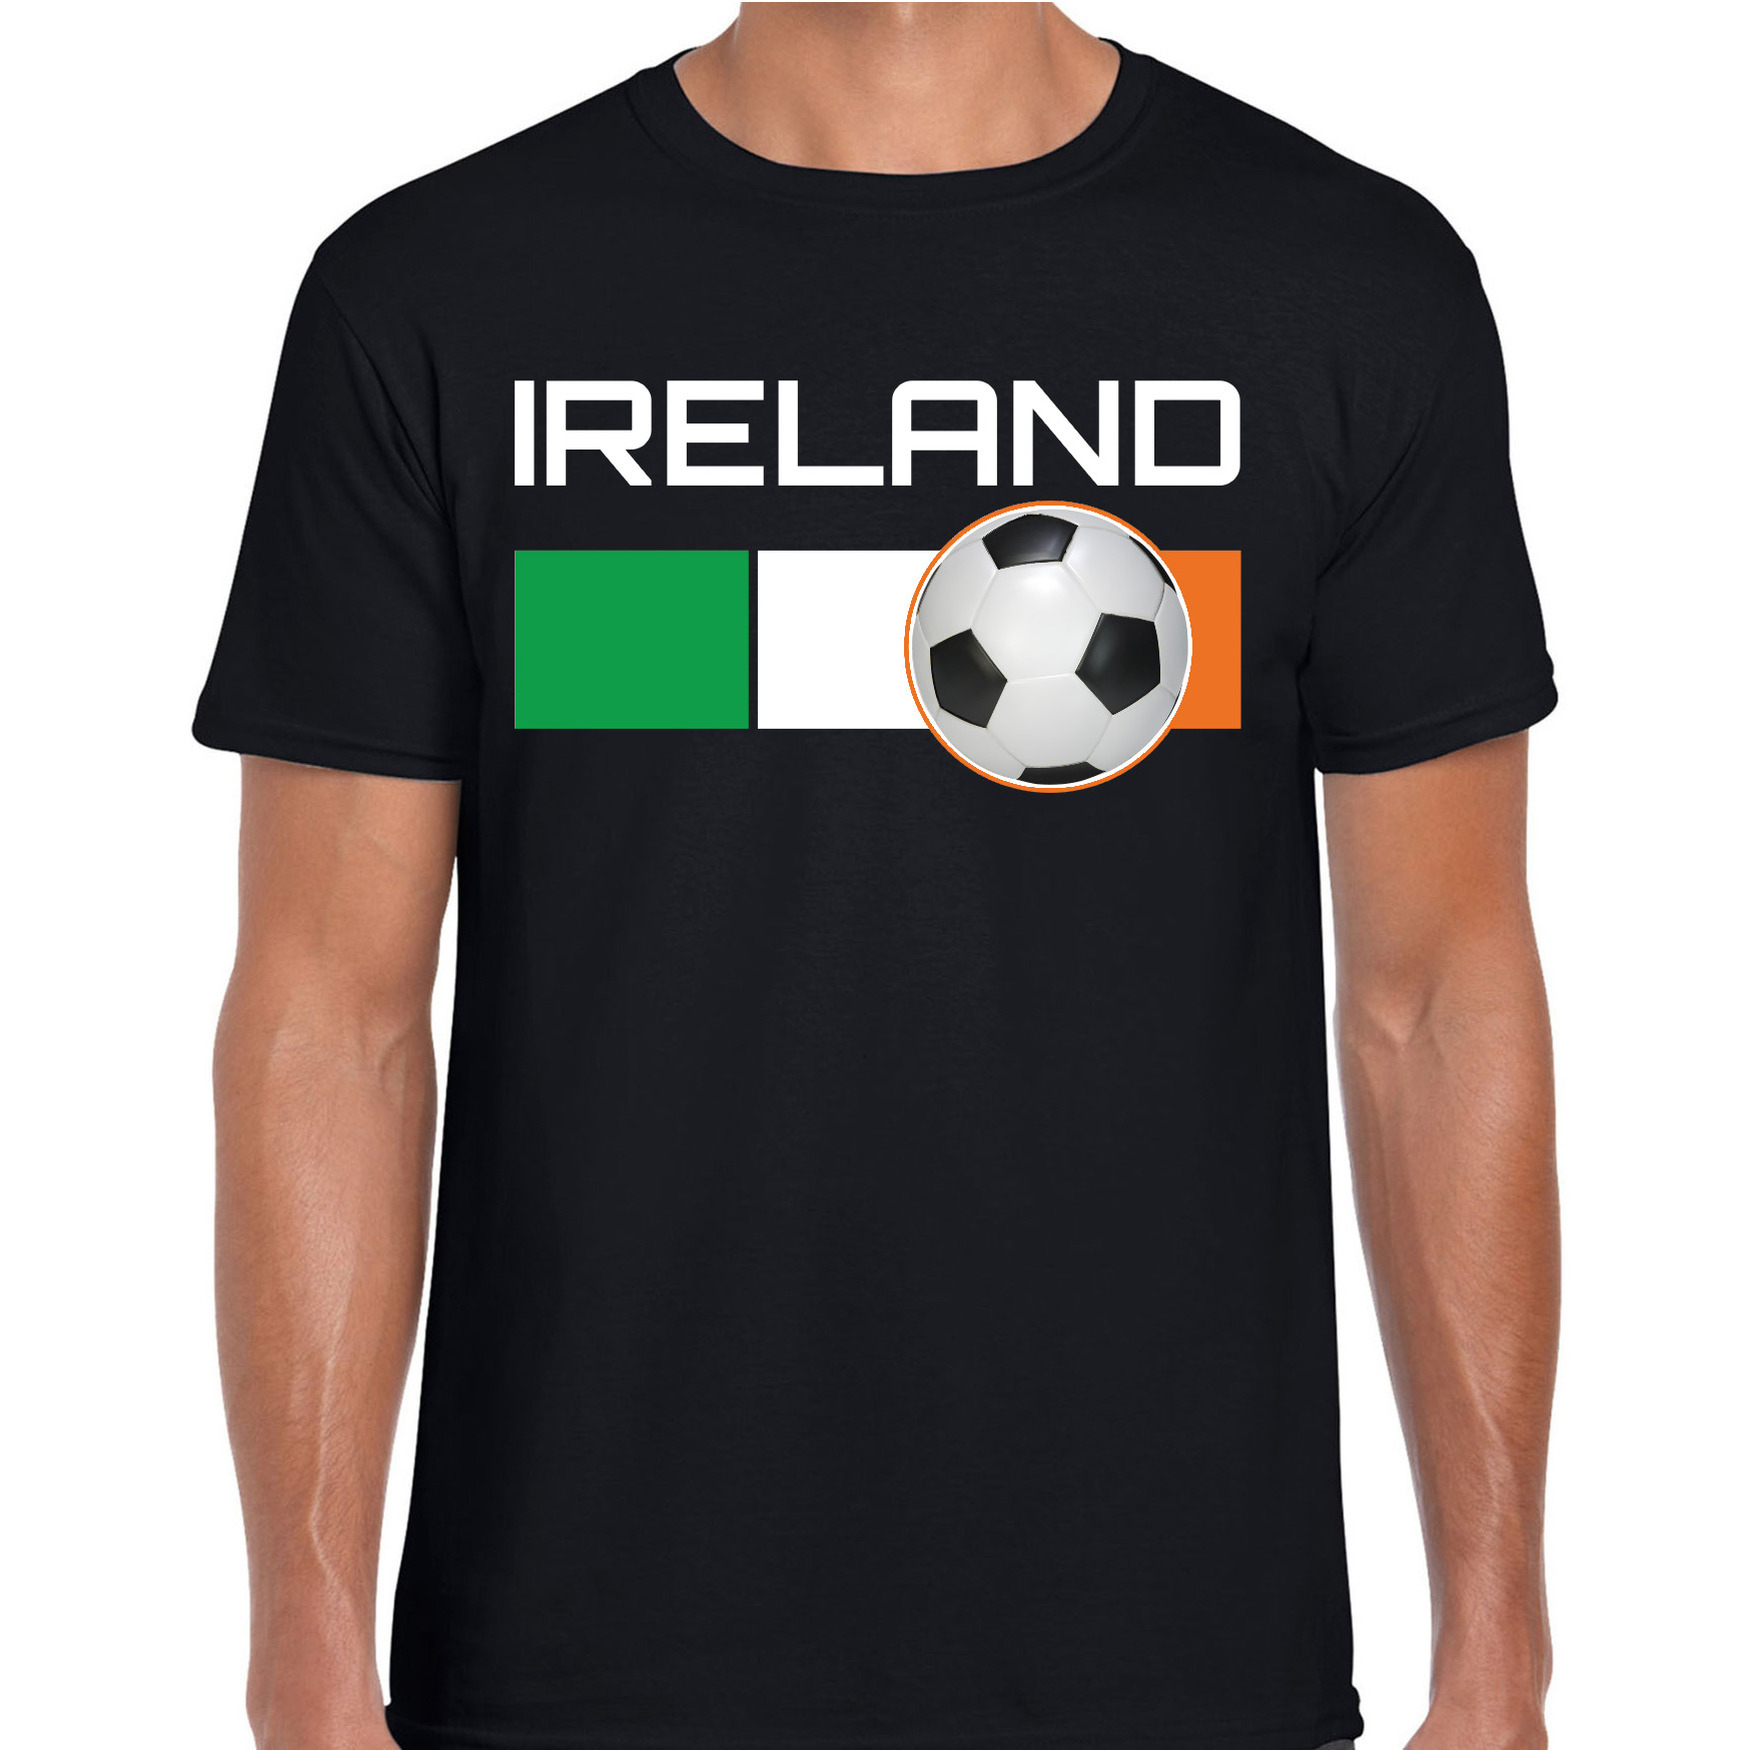 Ireland-Ierland voetbal-landen t-shirt zwart heren